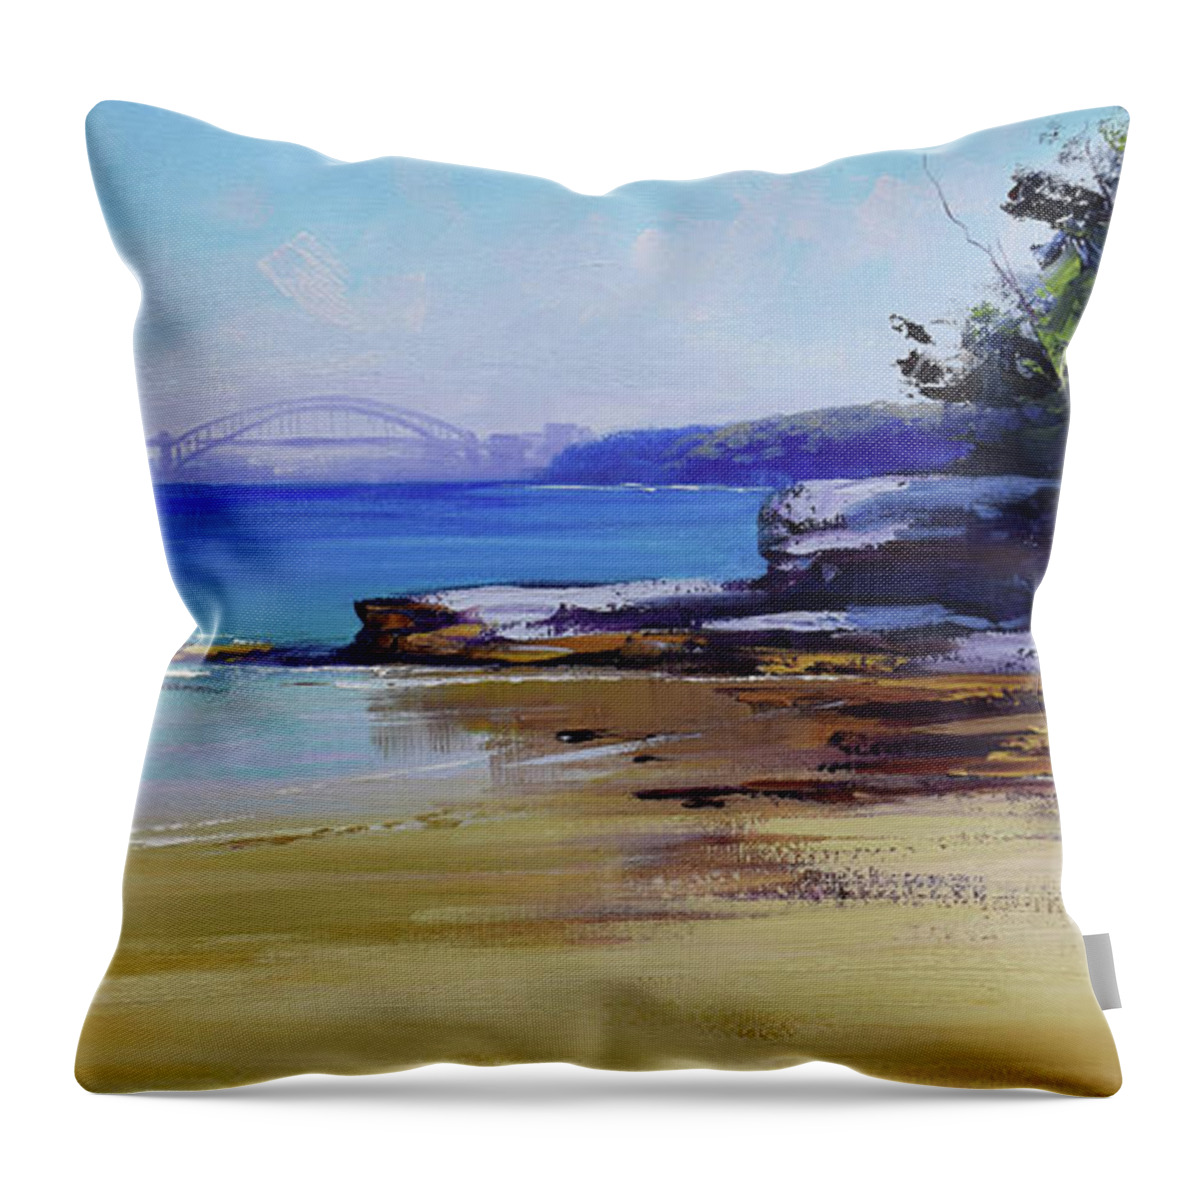 Sydney Throw Pillow featuring the painting Milk Beach Sydney by Graham Gercken